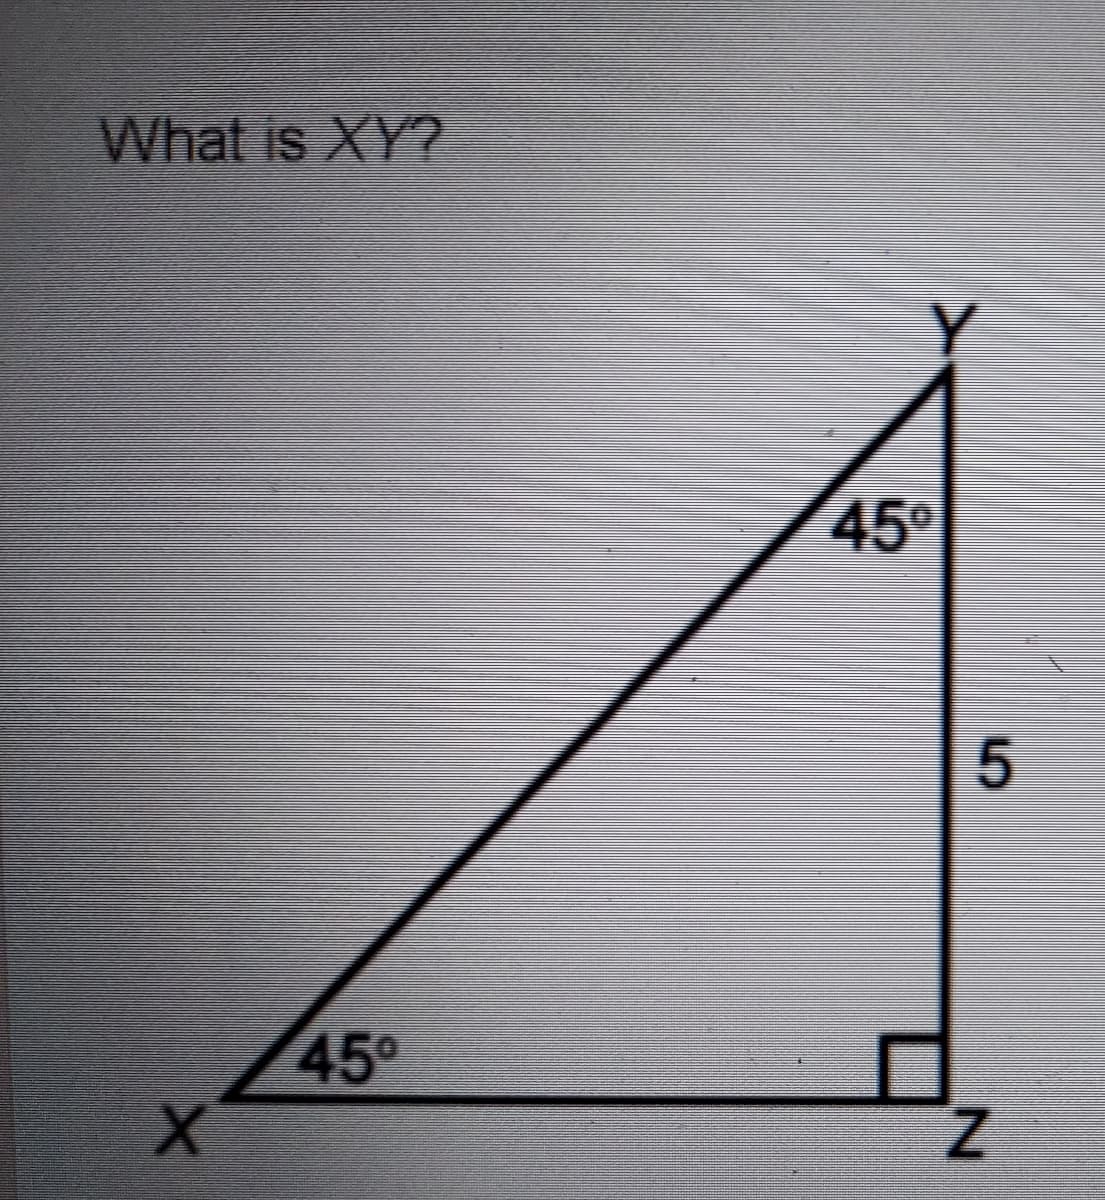 What is XY?
45
45
Z.
